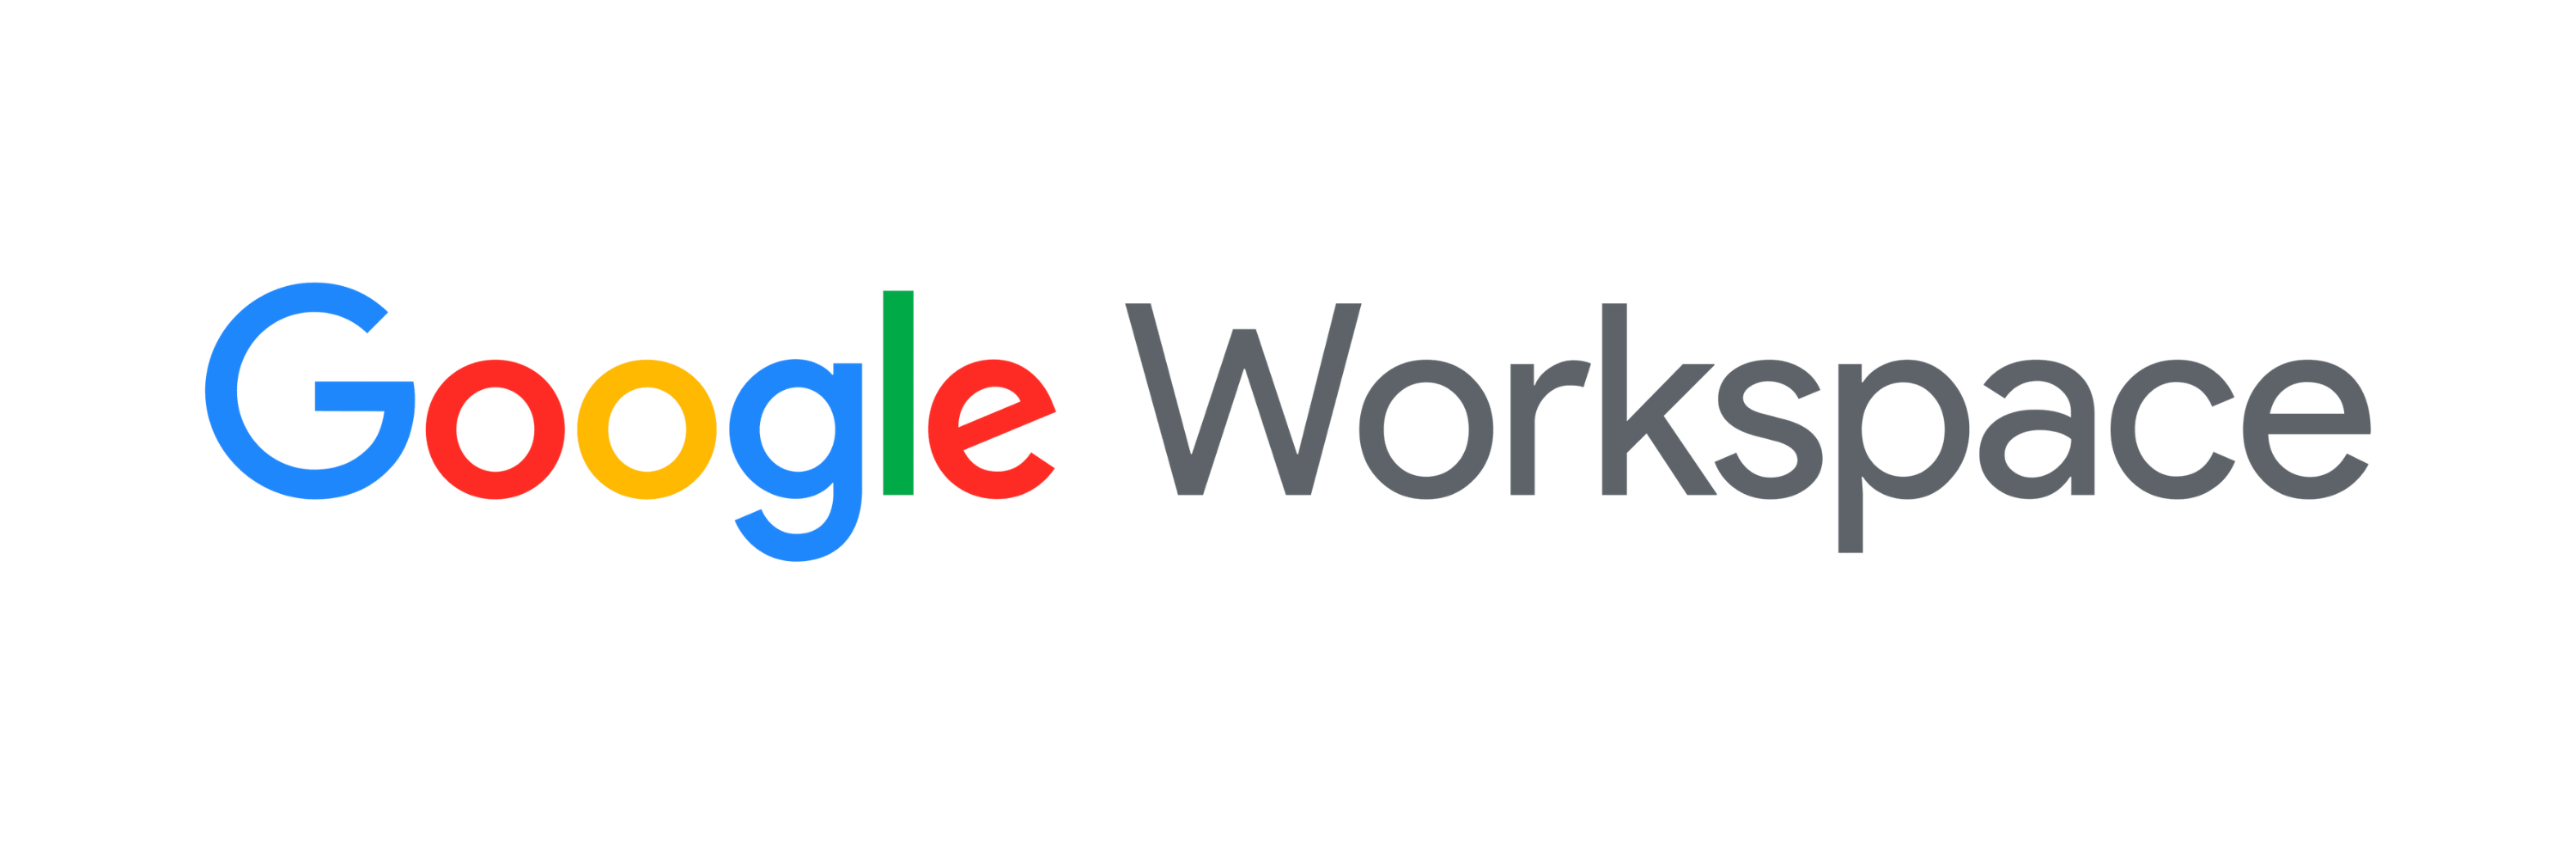 Google Workspace_Logo